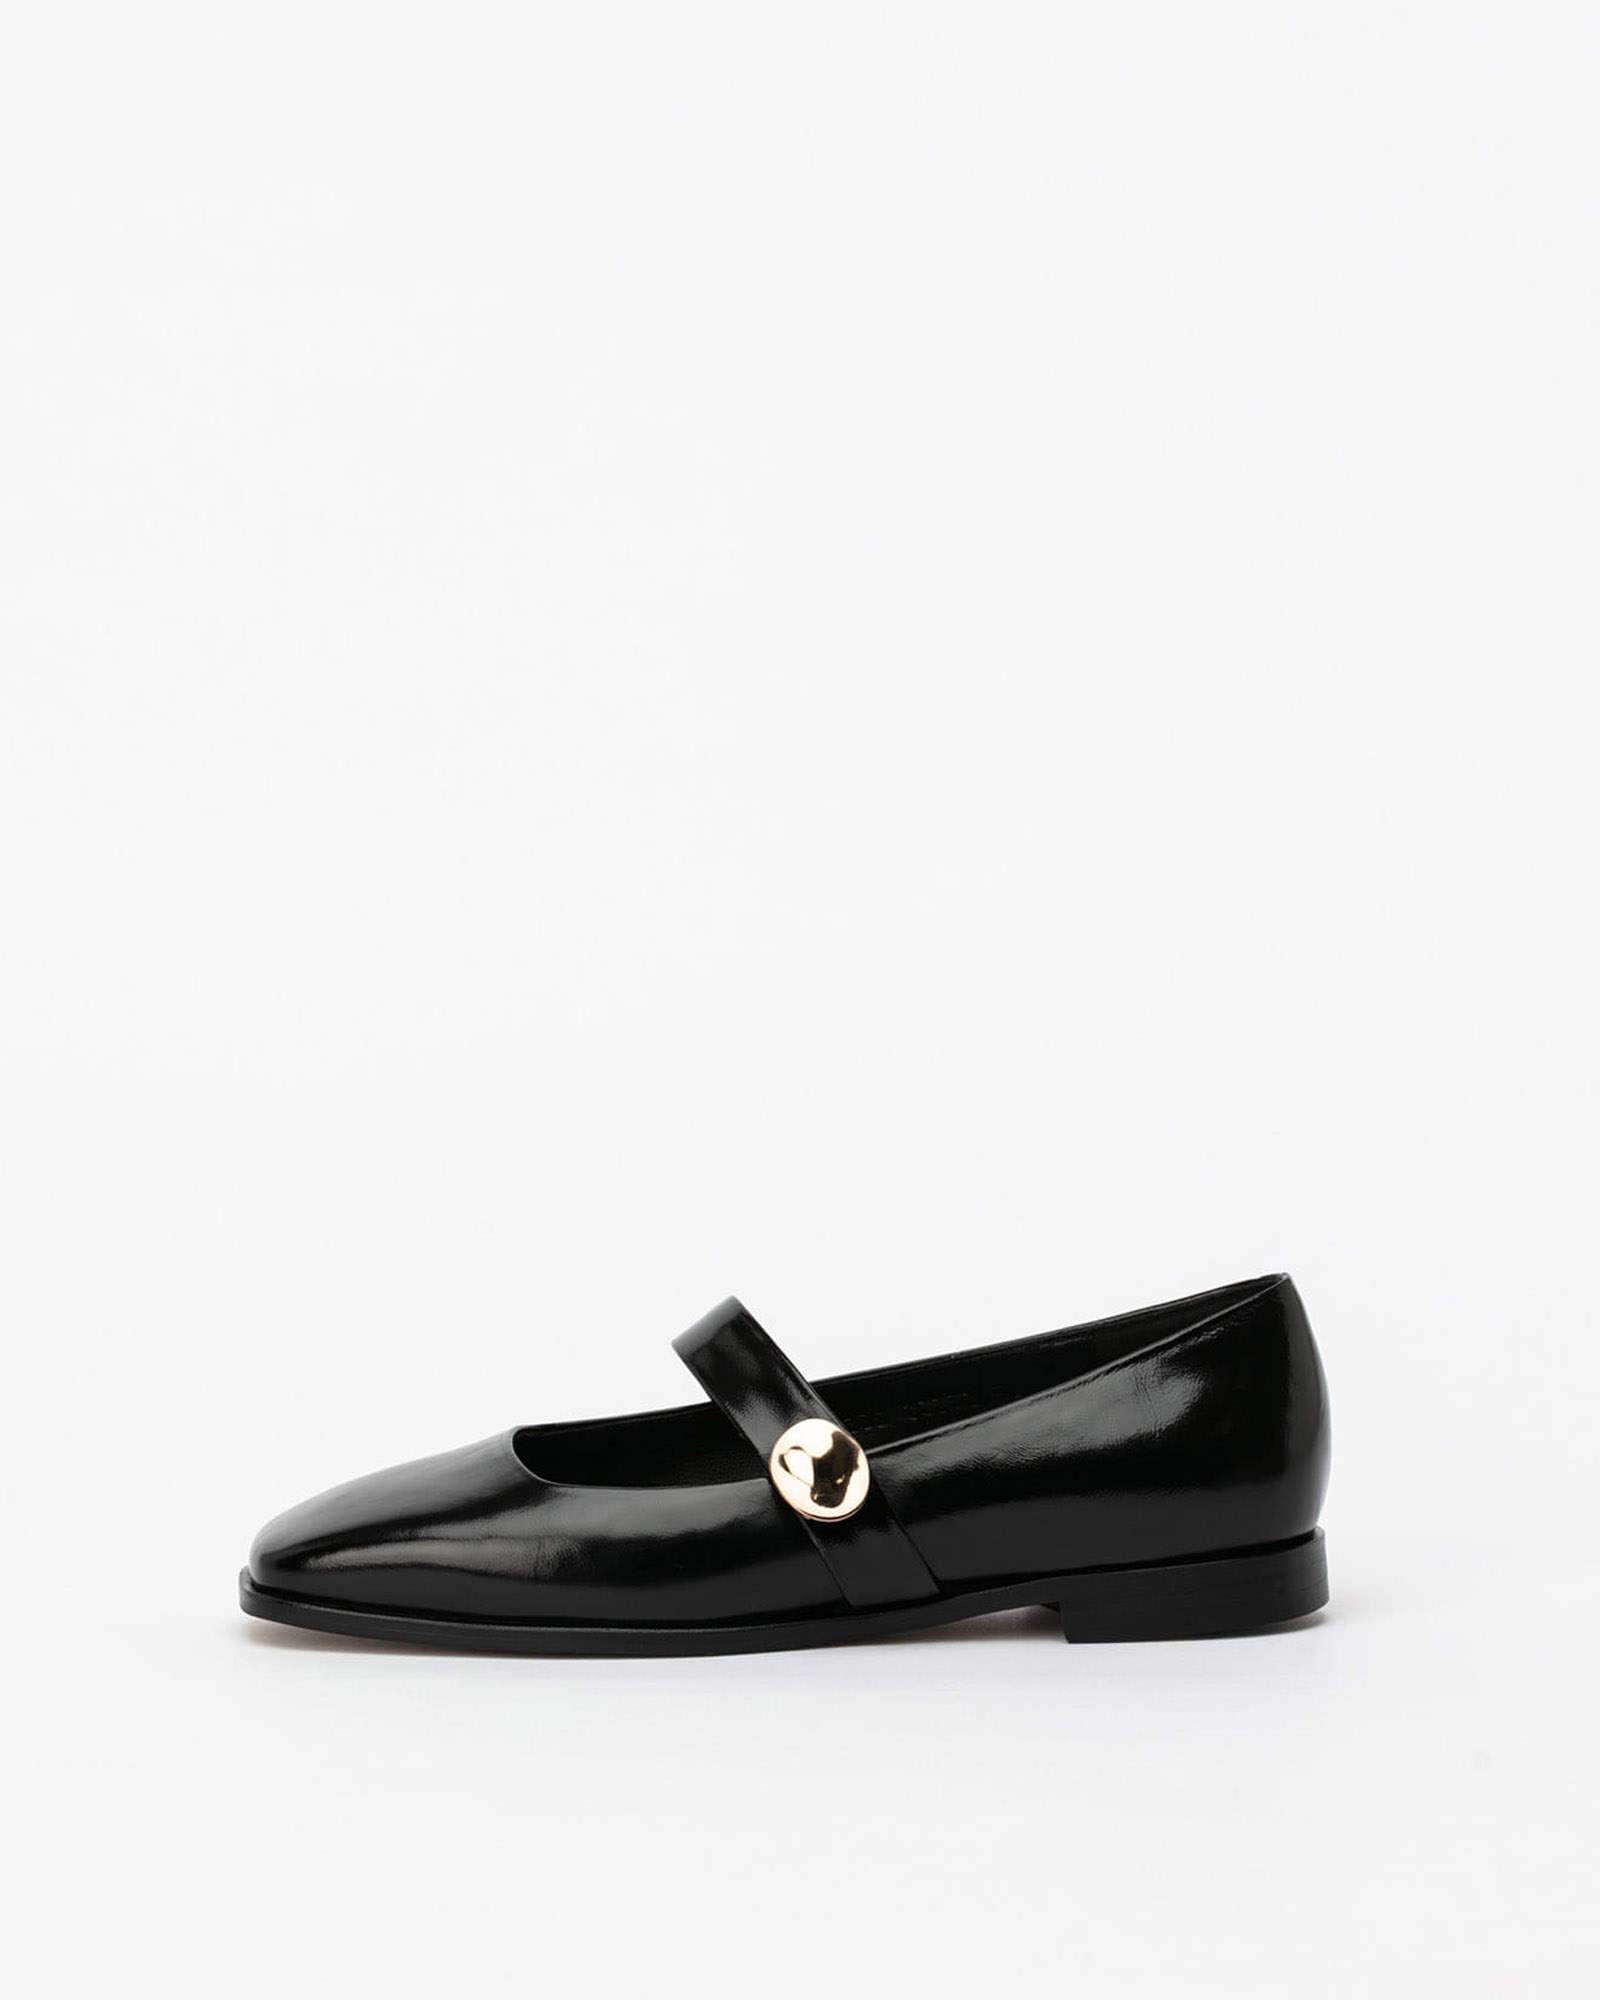 Mealan MaryJane Flat Shoes in Black